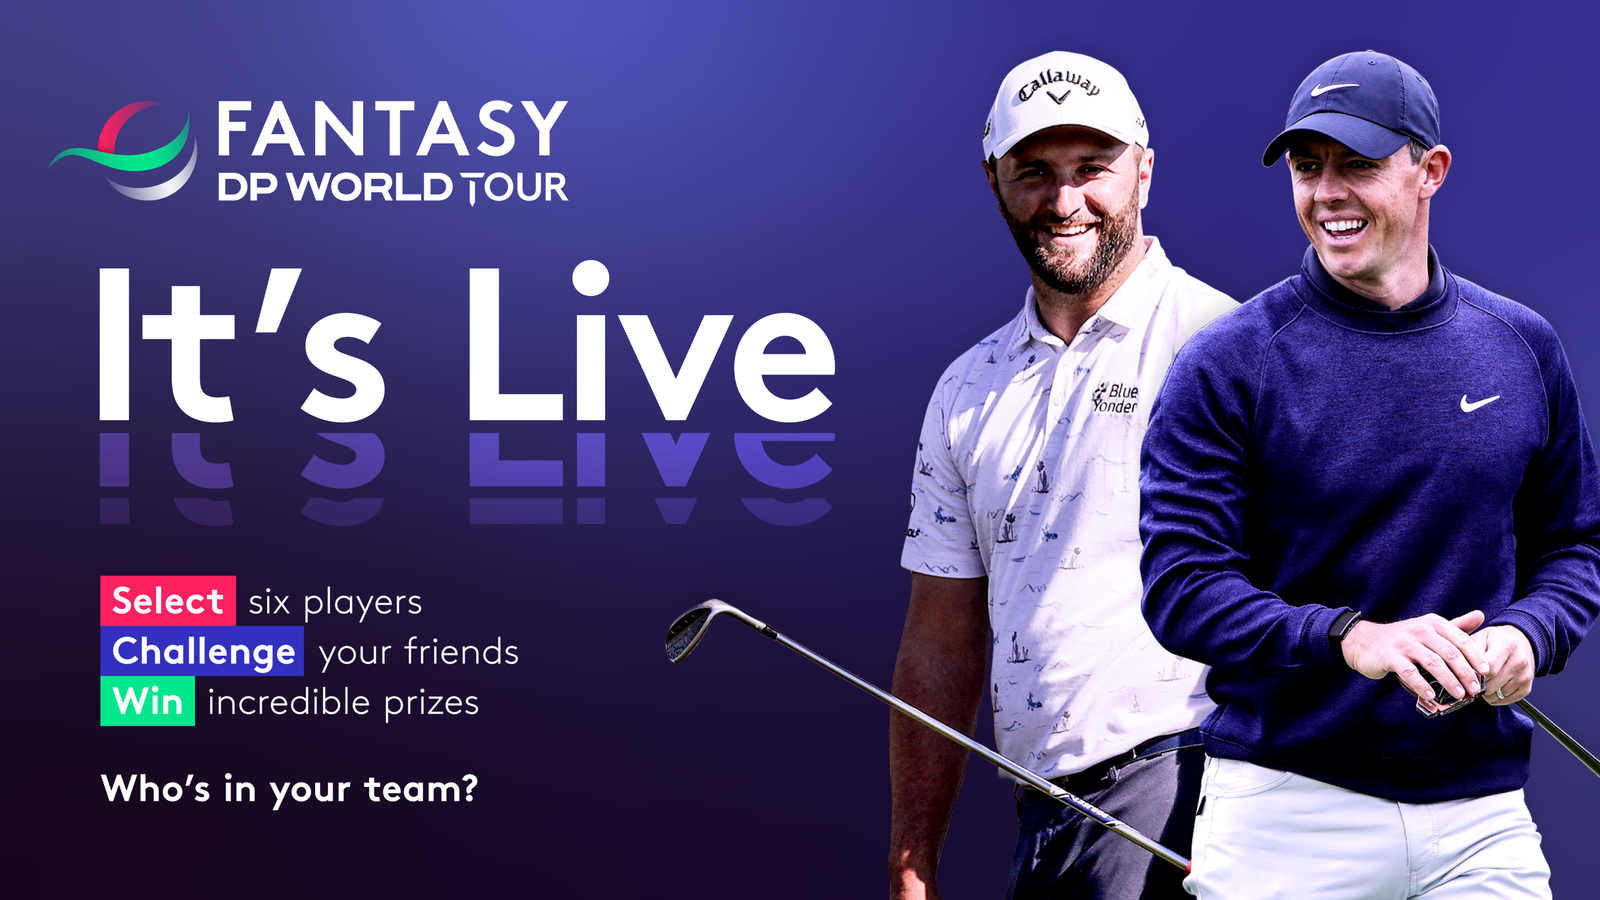 dp world tour fantasy golf app